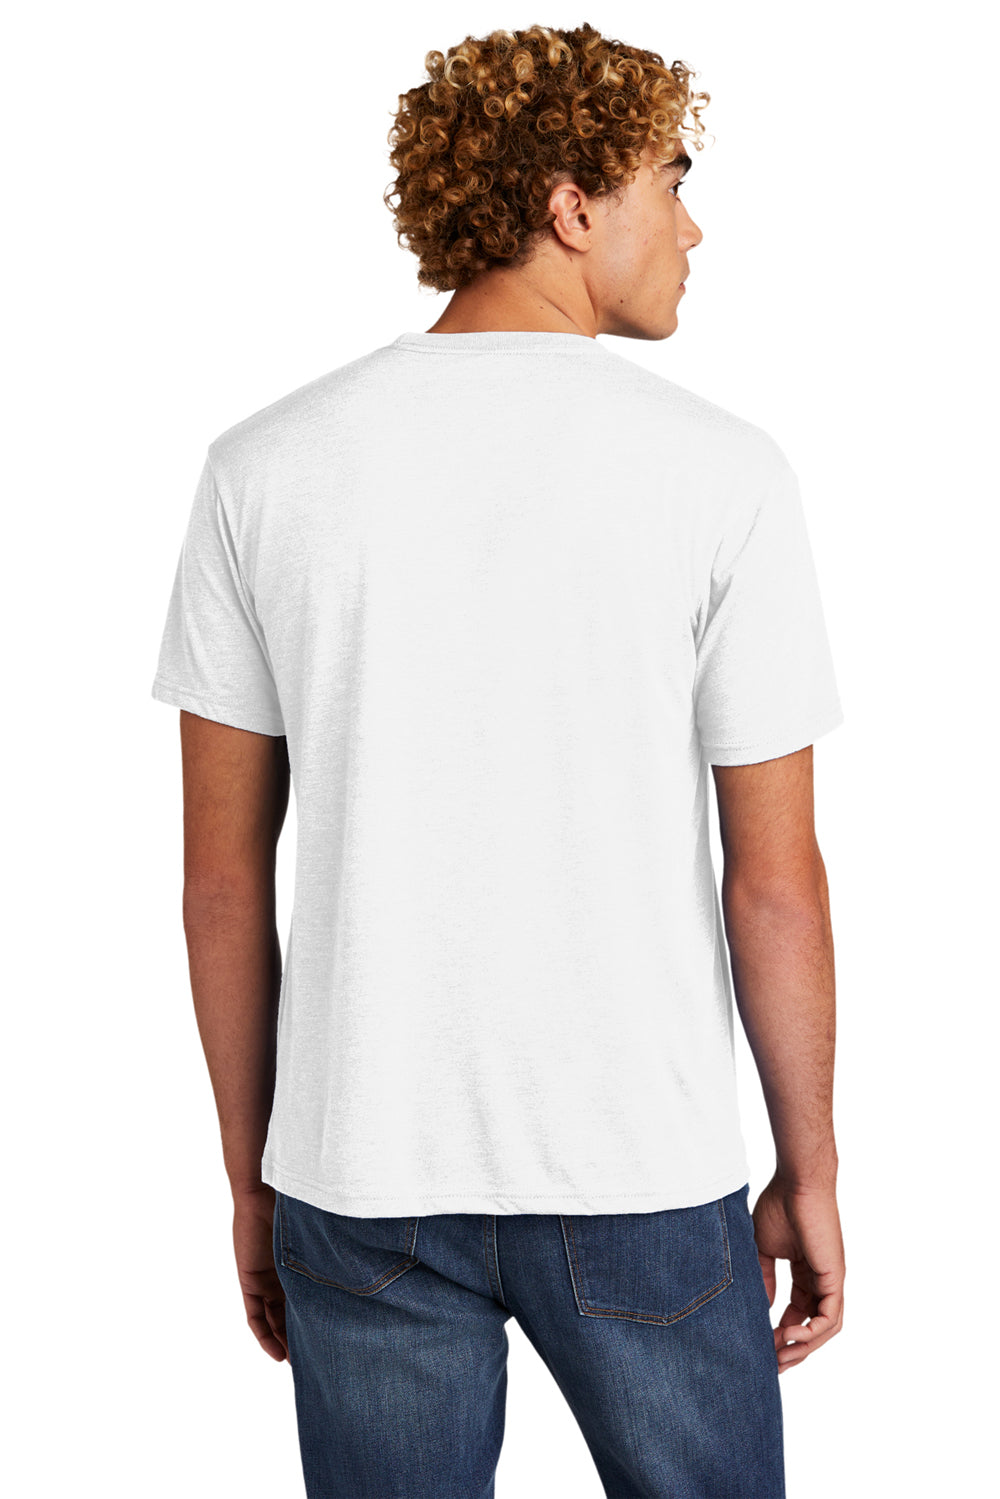 Next Level NL6010/6010 Mens Jersey Short Sleeve Crewneck T-Shirt White Back